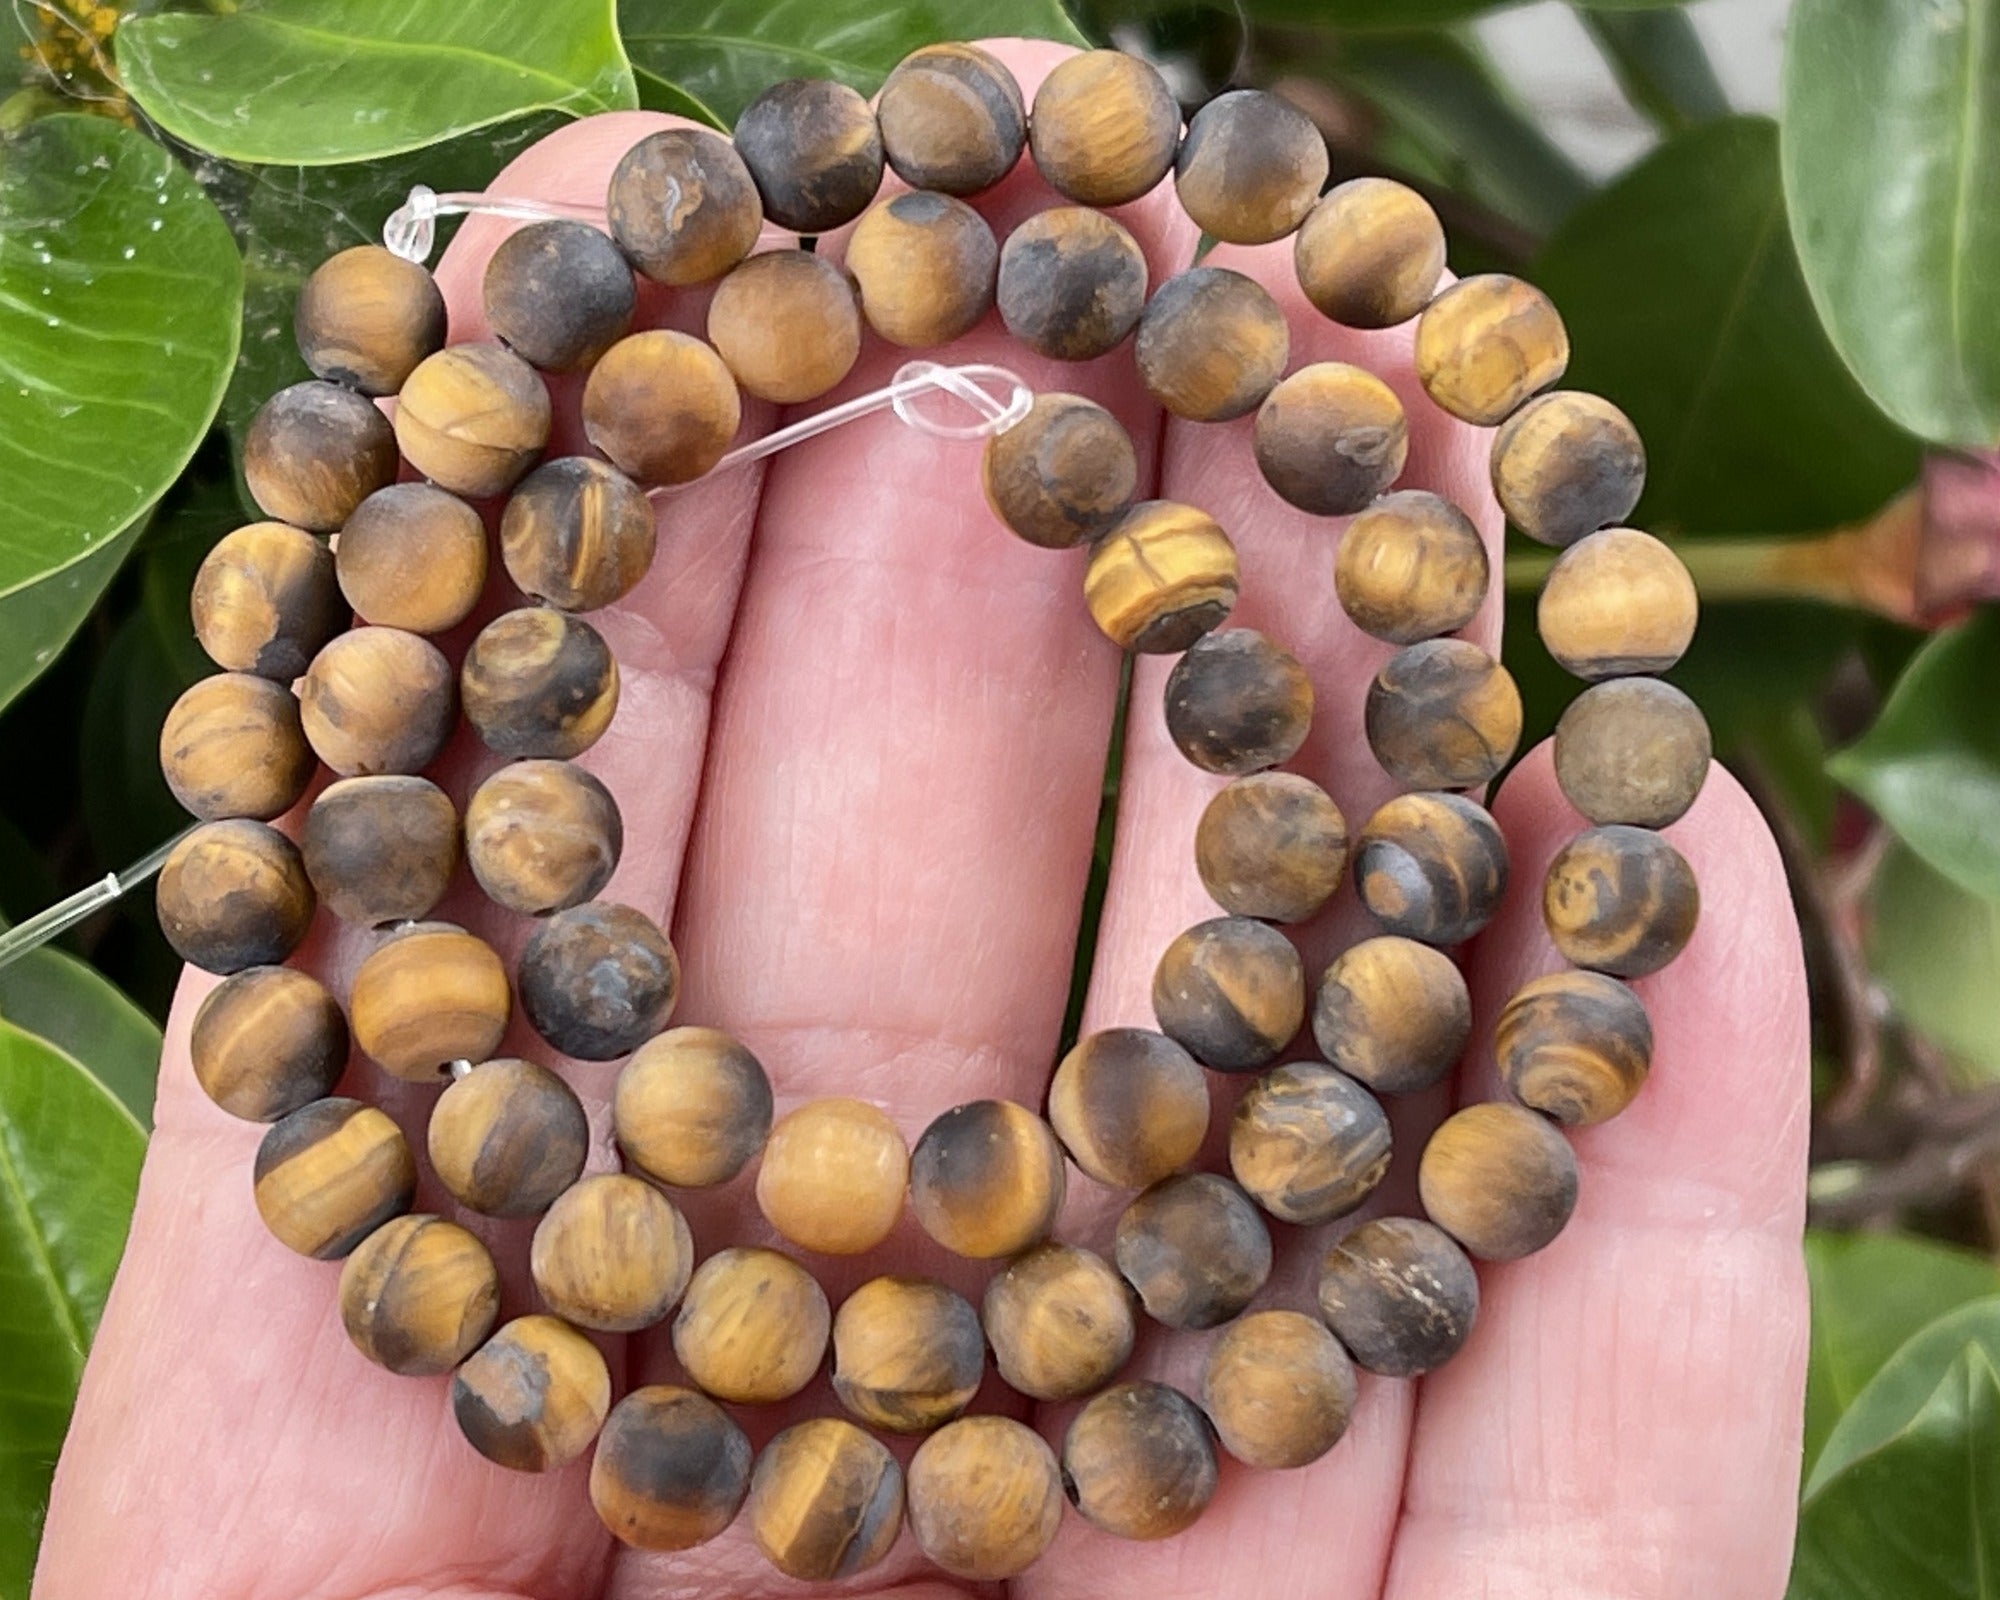 Yellow Tiger Eye matte 6mm round gemstone beads 15" strand - Oz Beads 